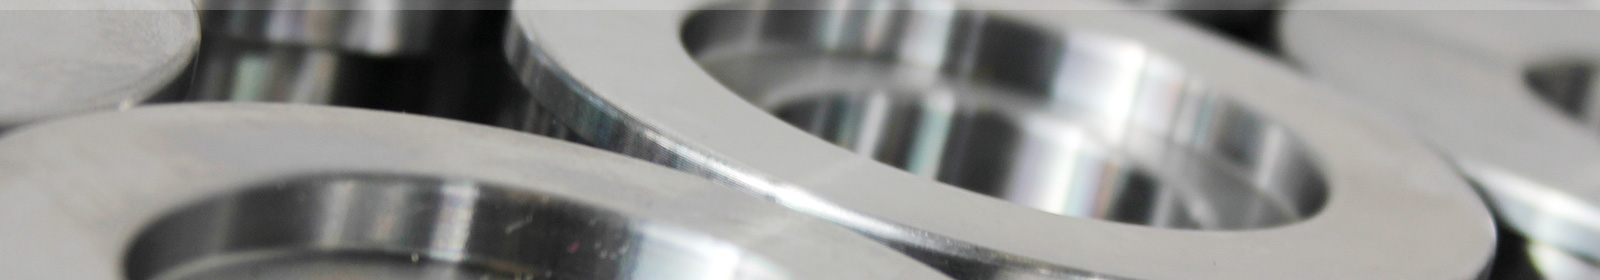 Rieger Metallveredlung – Nickel plating